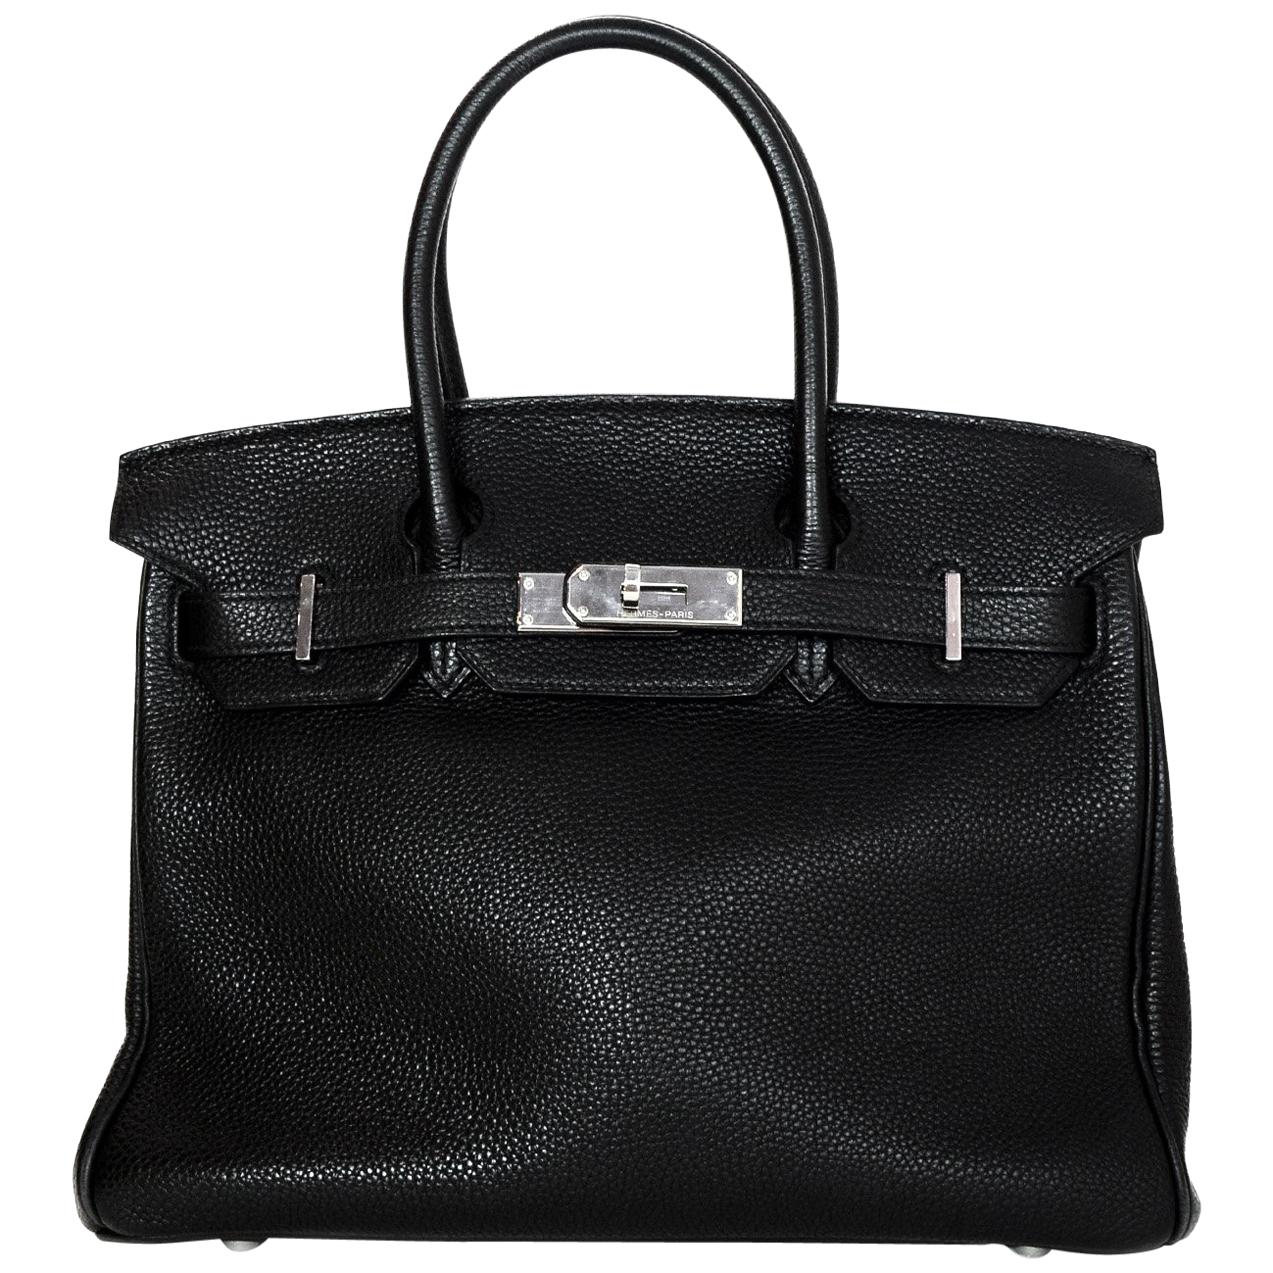 Hermes Black Togo Leather 30CM Birkin Bag w. Palladium/Silvertone Hardware